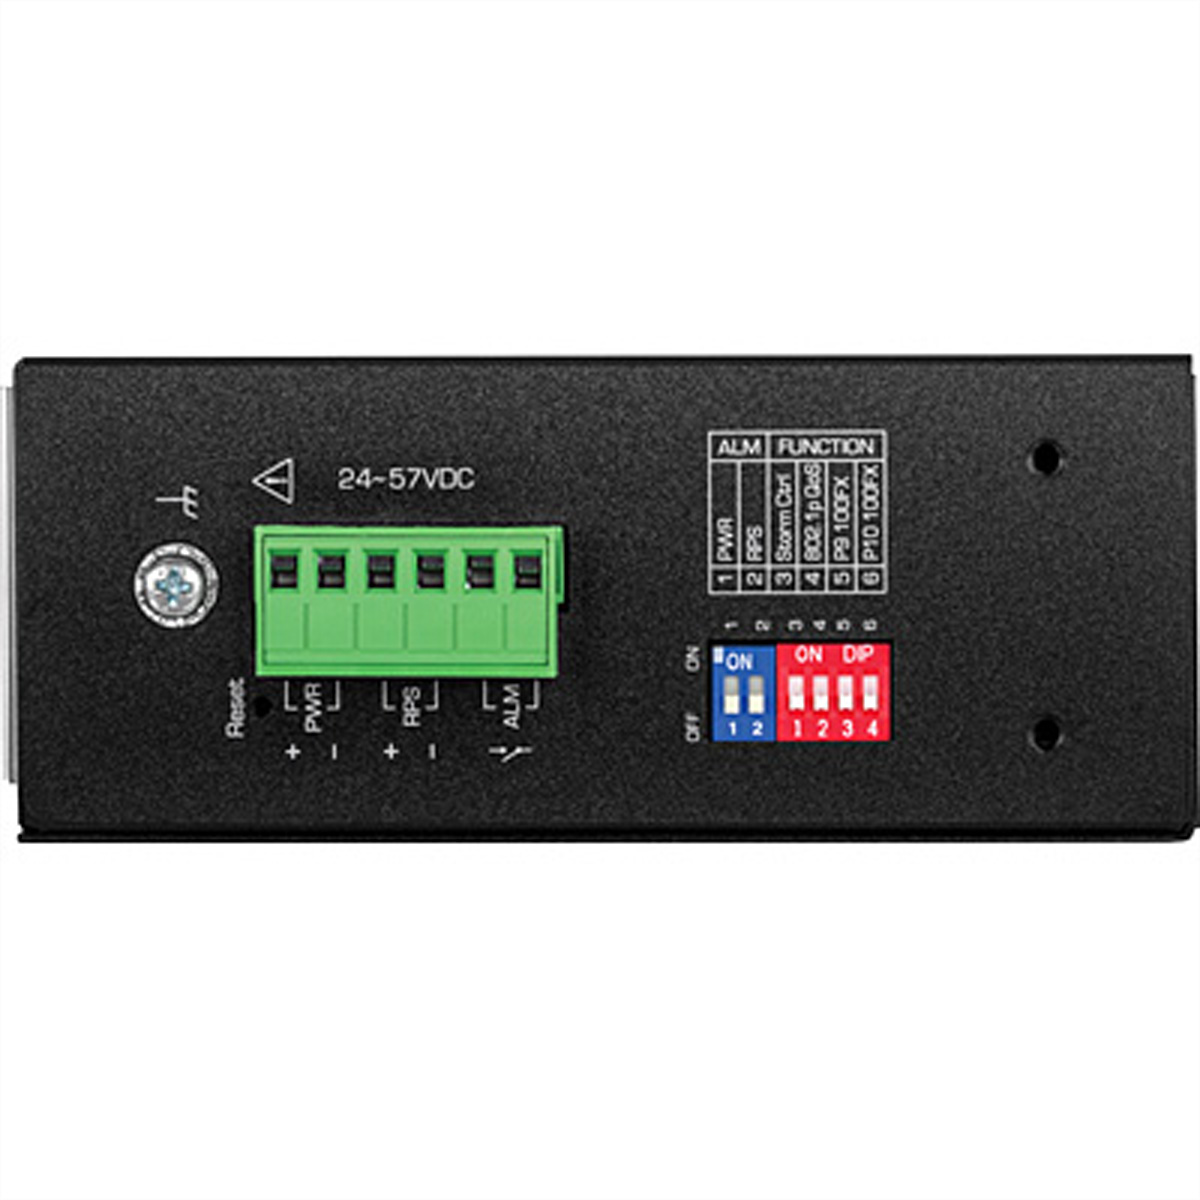 Industrial PoE+ Industrial Gigabit TRENDNET Networking TI-PG102i Managed 10-Port DIN-Rail Switch